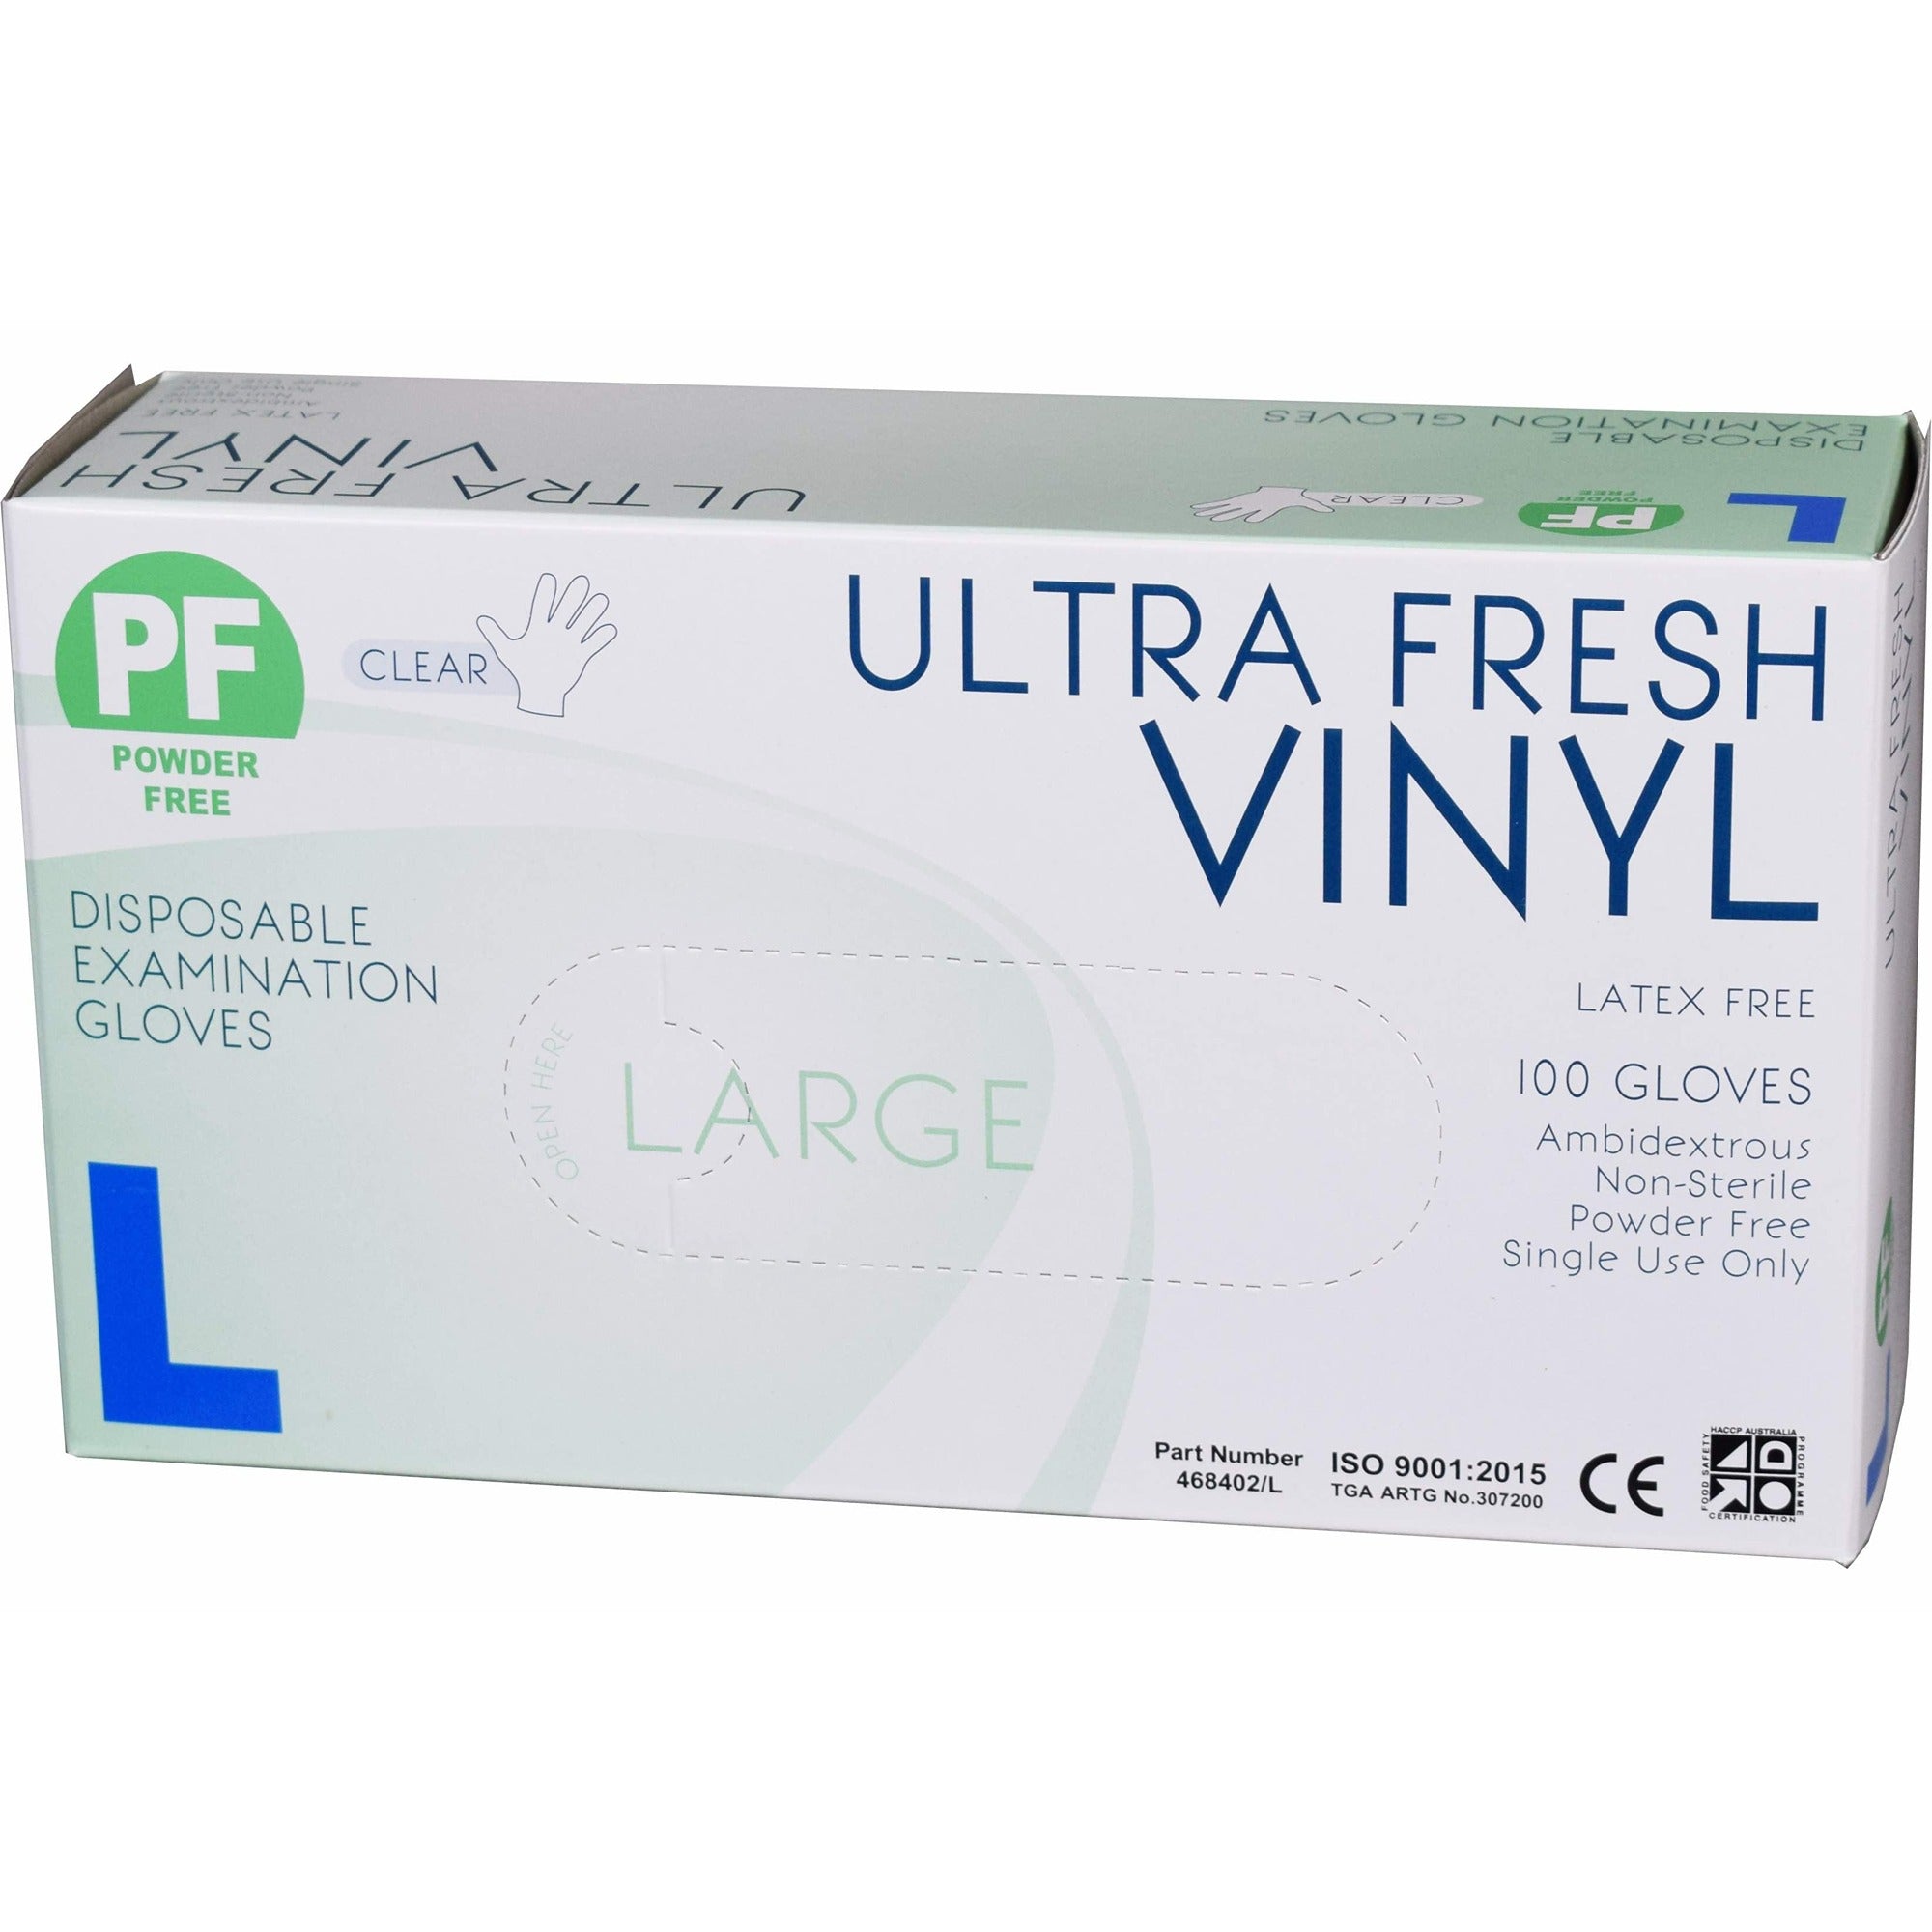 Gloves Ultra Fresh Clear Vinyl P/F Large Box of 100